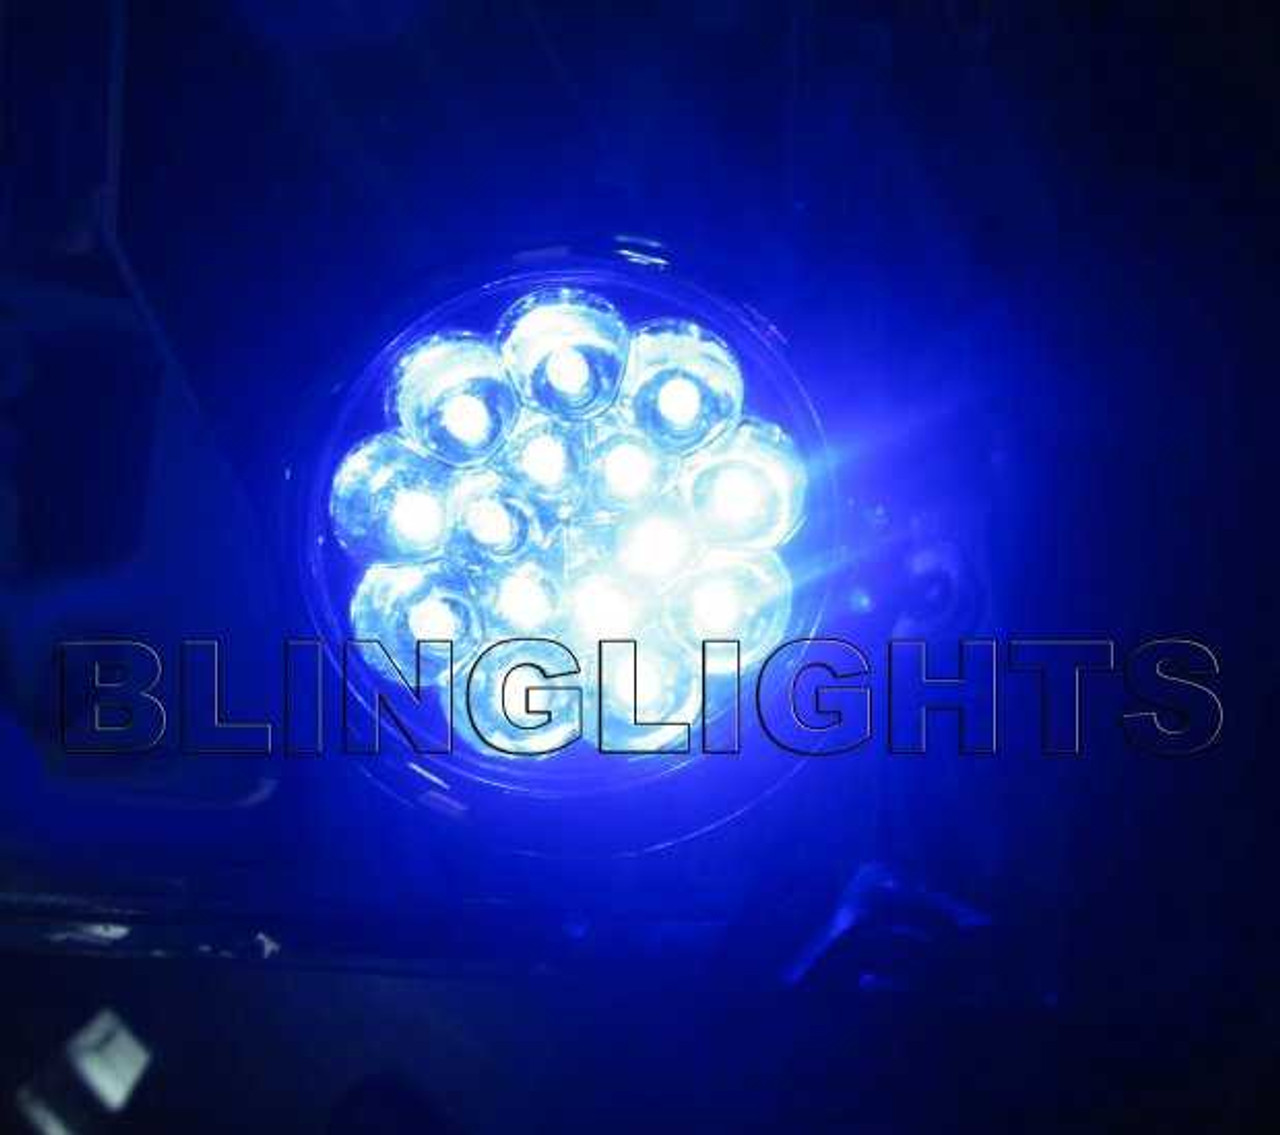 Chevrolet Tahoe LED Grille Police Lights Chevy GMT900 Driving Fog Lamps EMT Kit